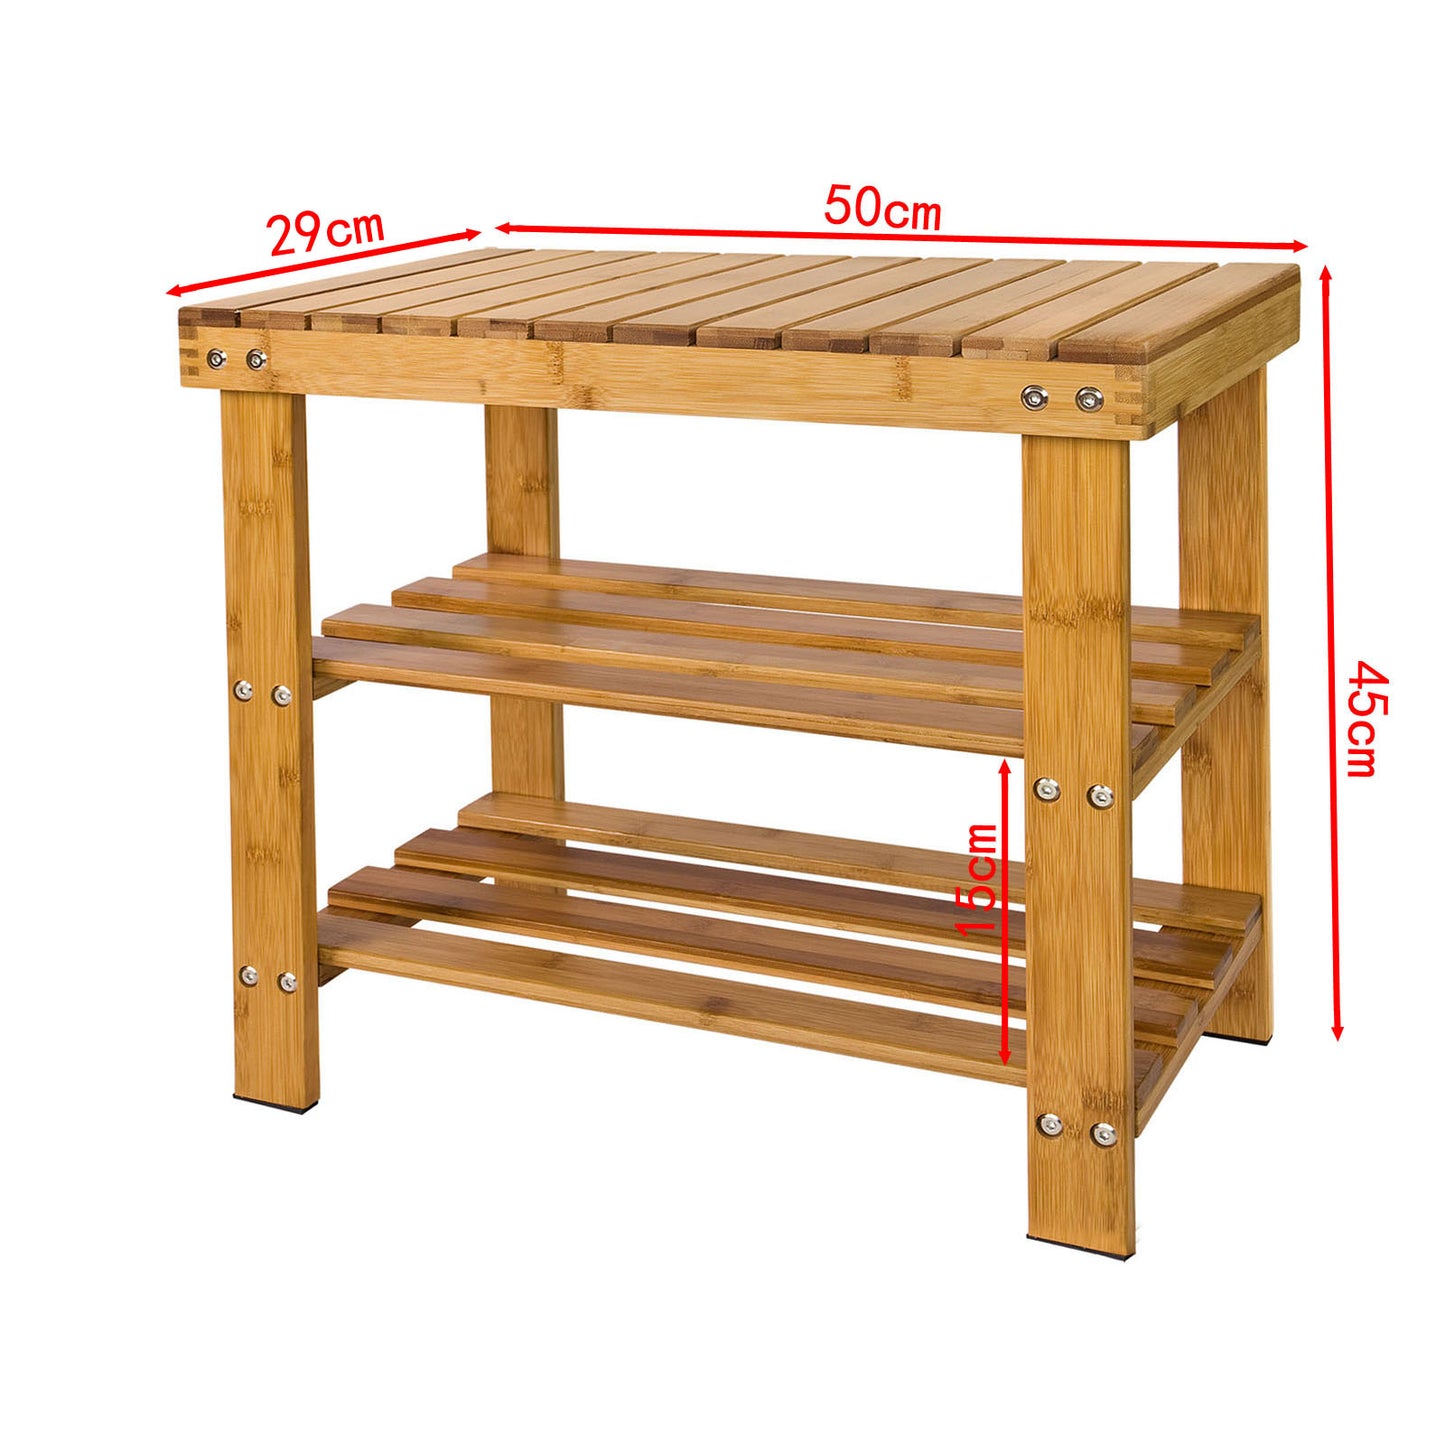 SoBuy FSR02-K-N Bamboo Shoe Bench, Shoe Rack, Storage Bench with Shelves, 50cmx29cmx45cm